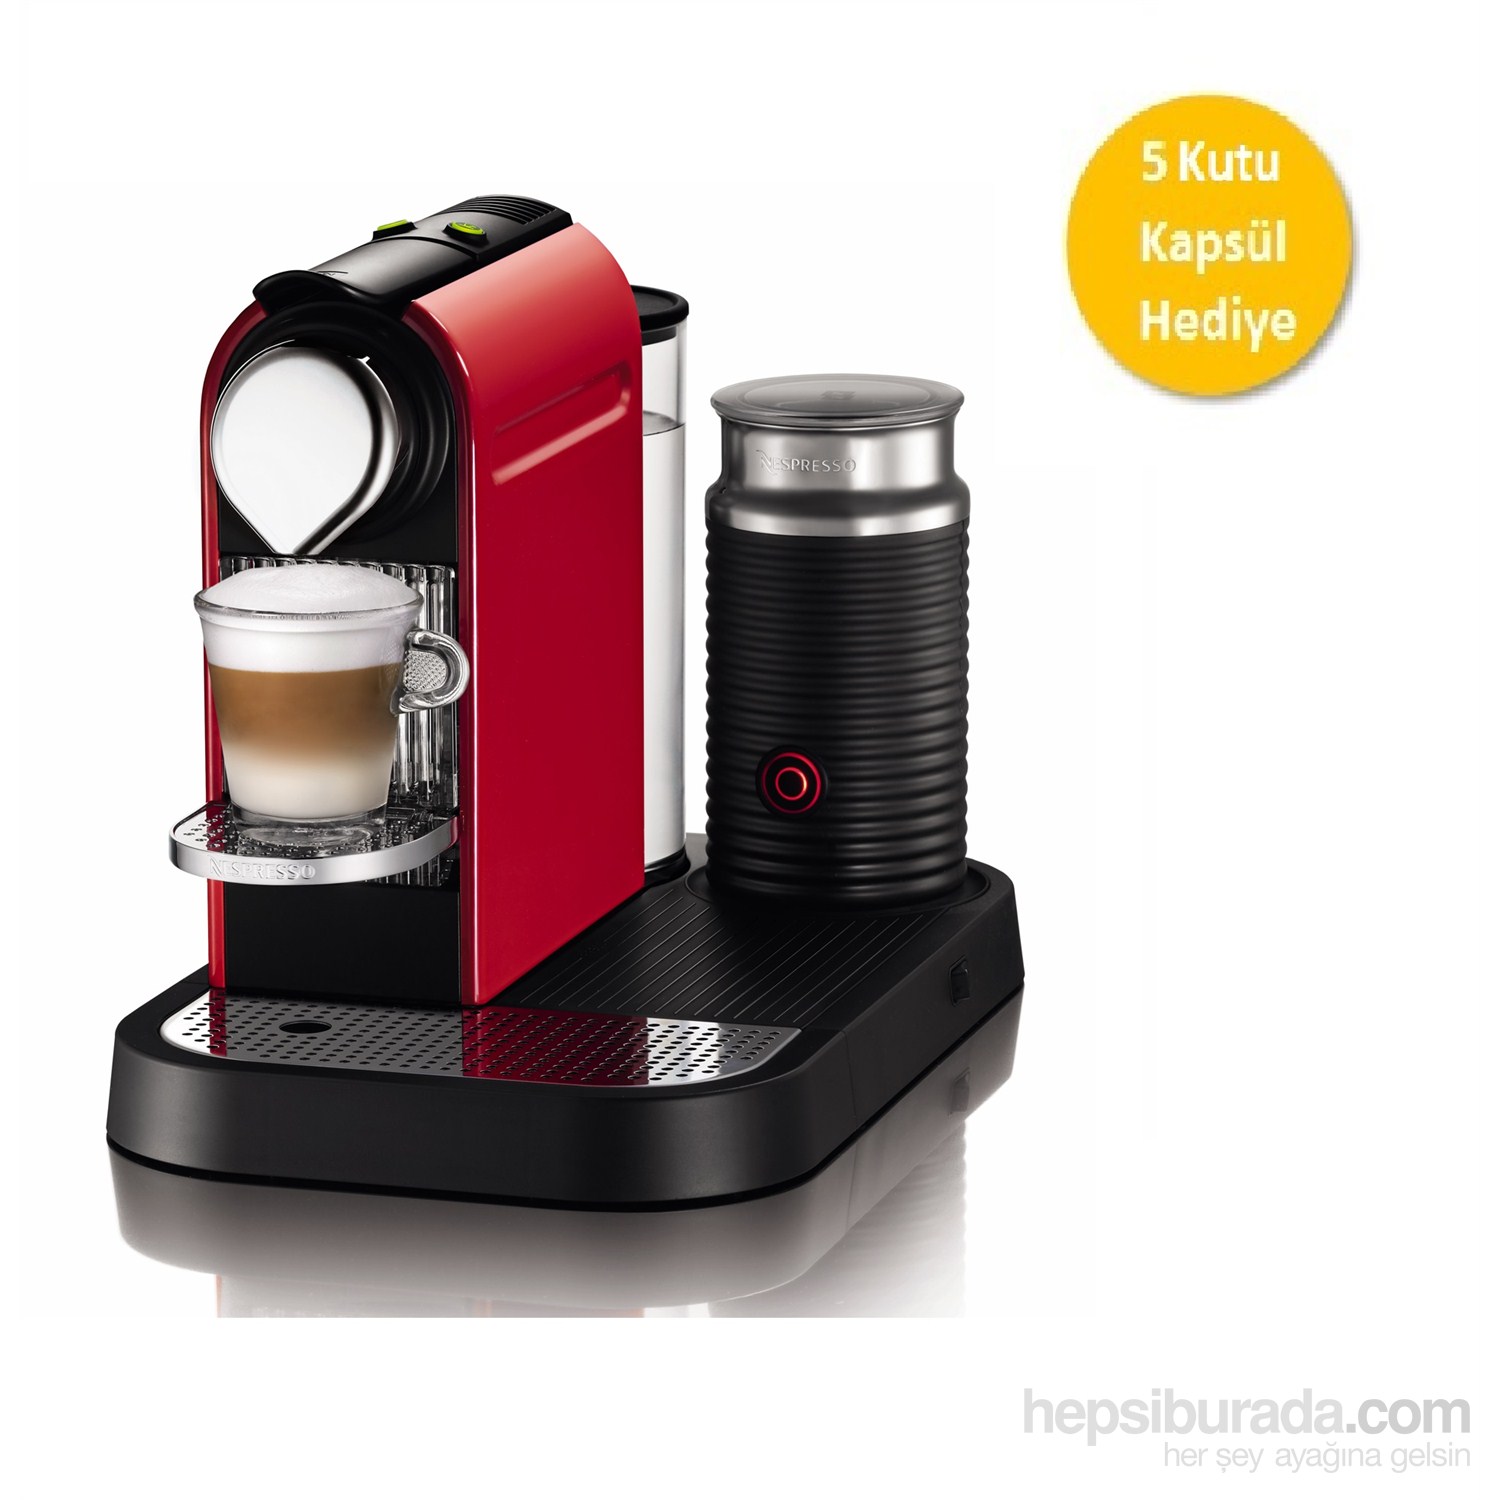 Nespresso C121 Citiz&Milk Kahve Makinesi-Kırmızı Renkli